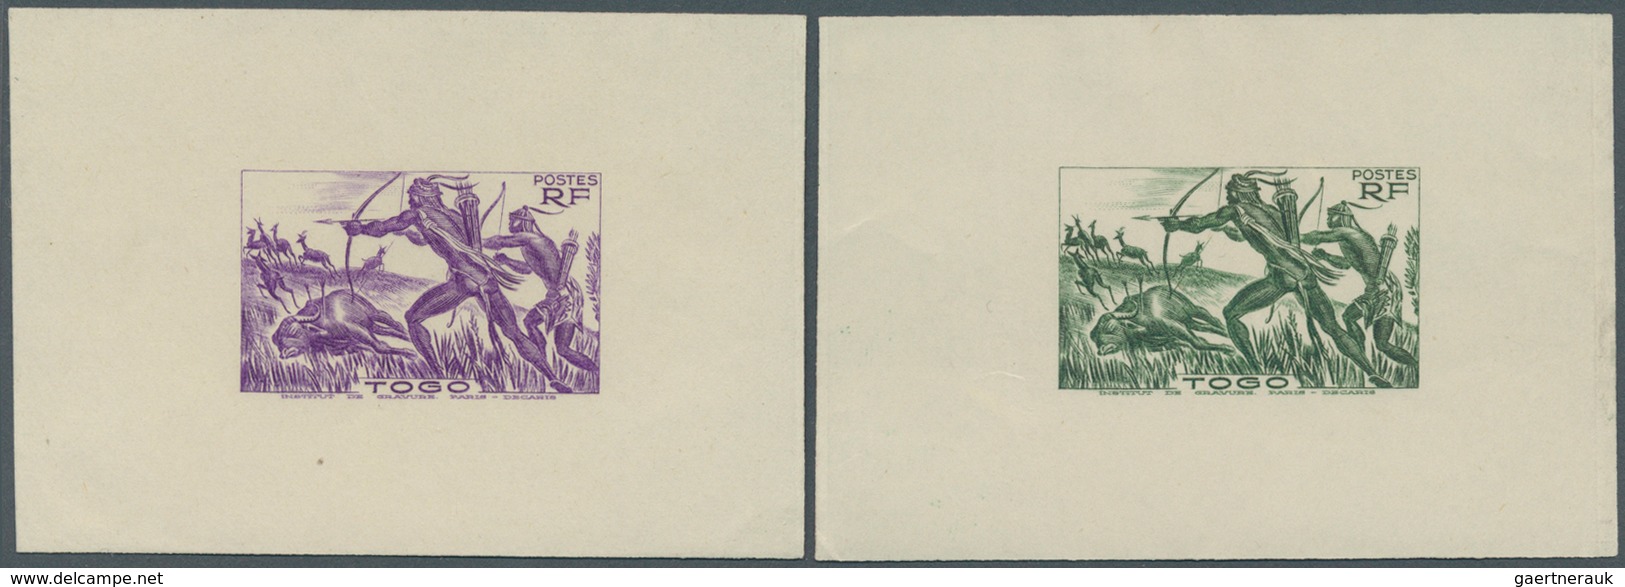 Französische Kolonien: 1921/1968, specialised assortment incl. 39 epreuve/single die proofs (of Sene